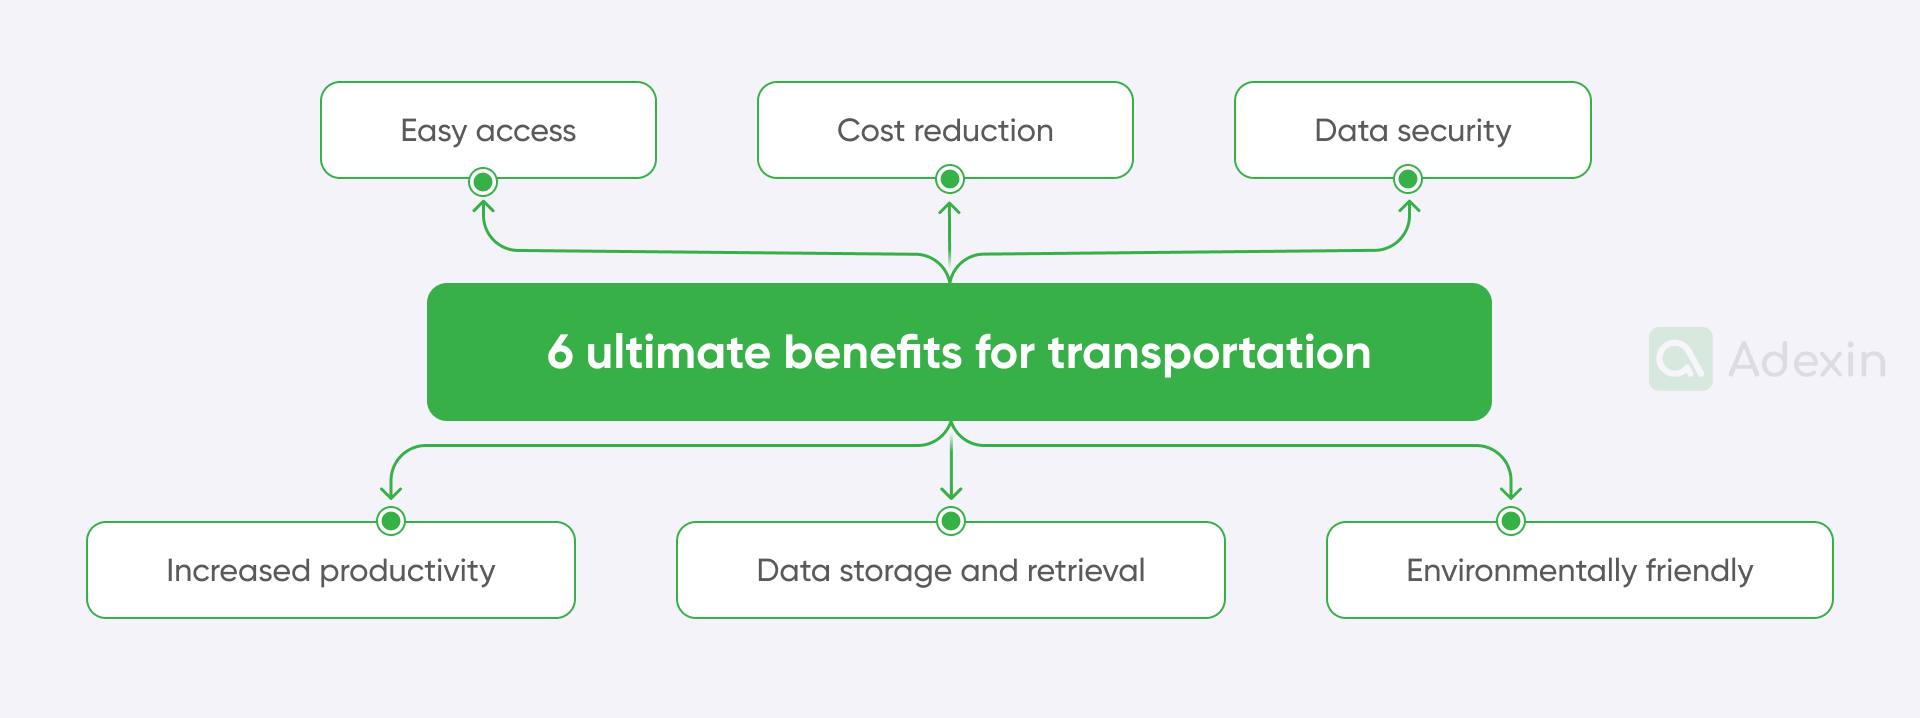 Document digitization benefits for transportation